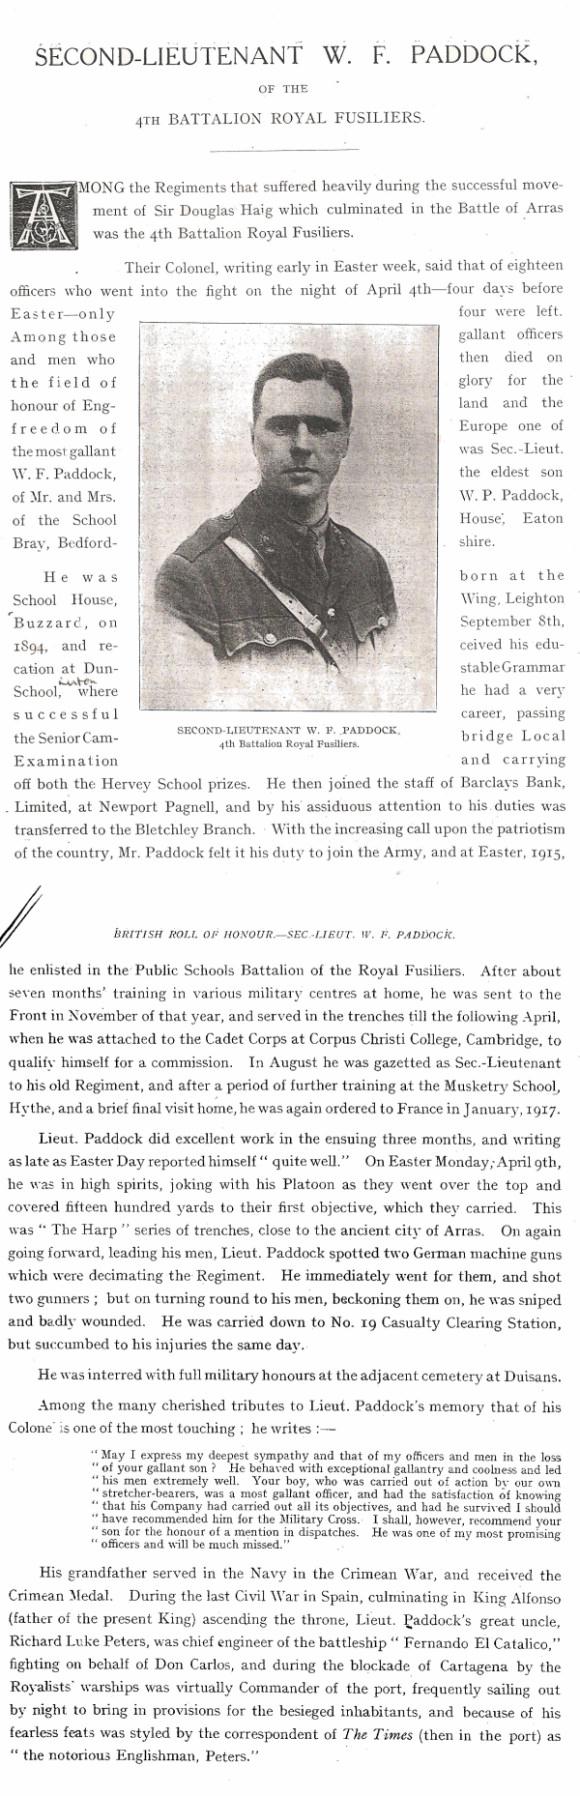 Biography of William Paddock